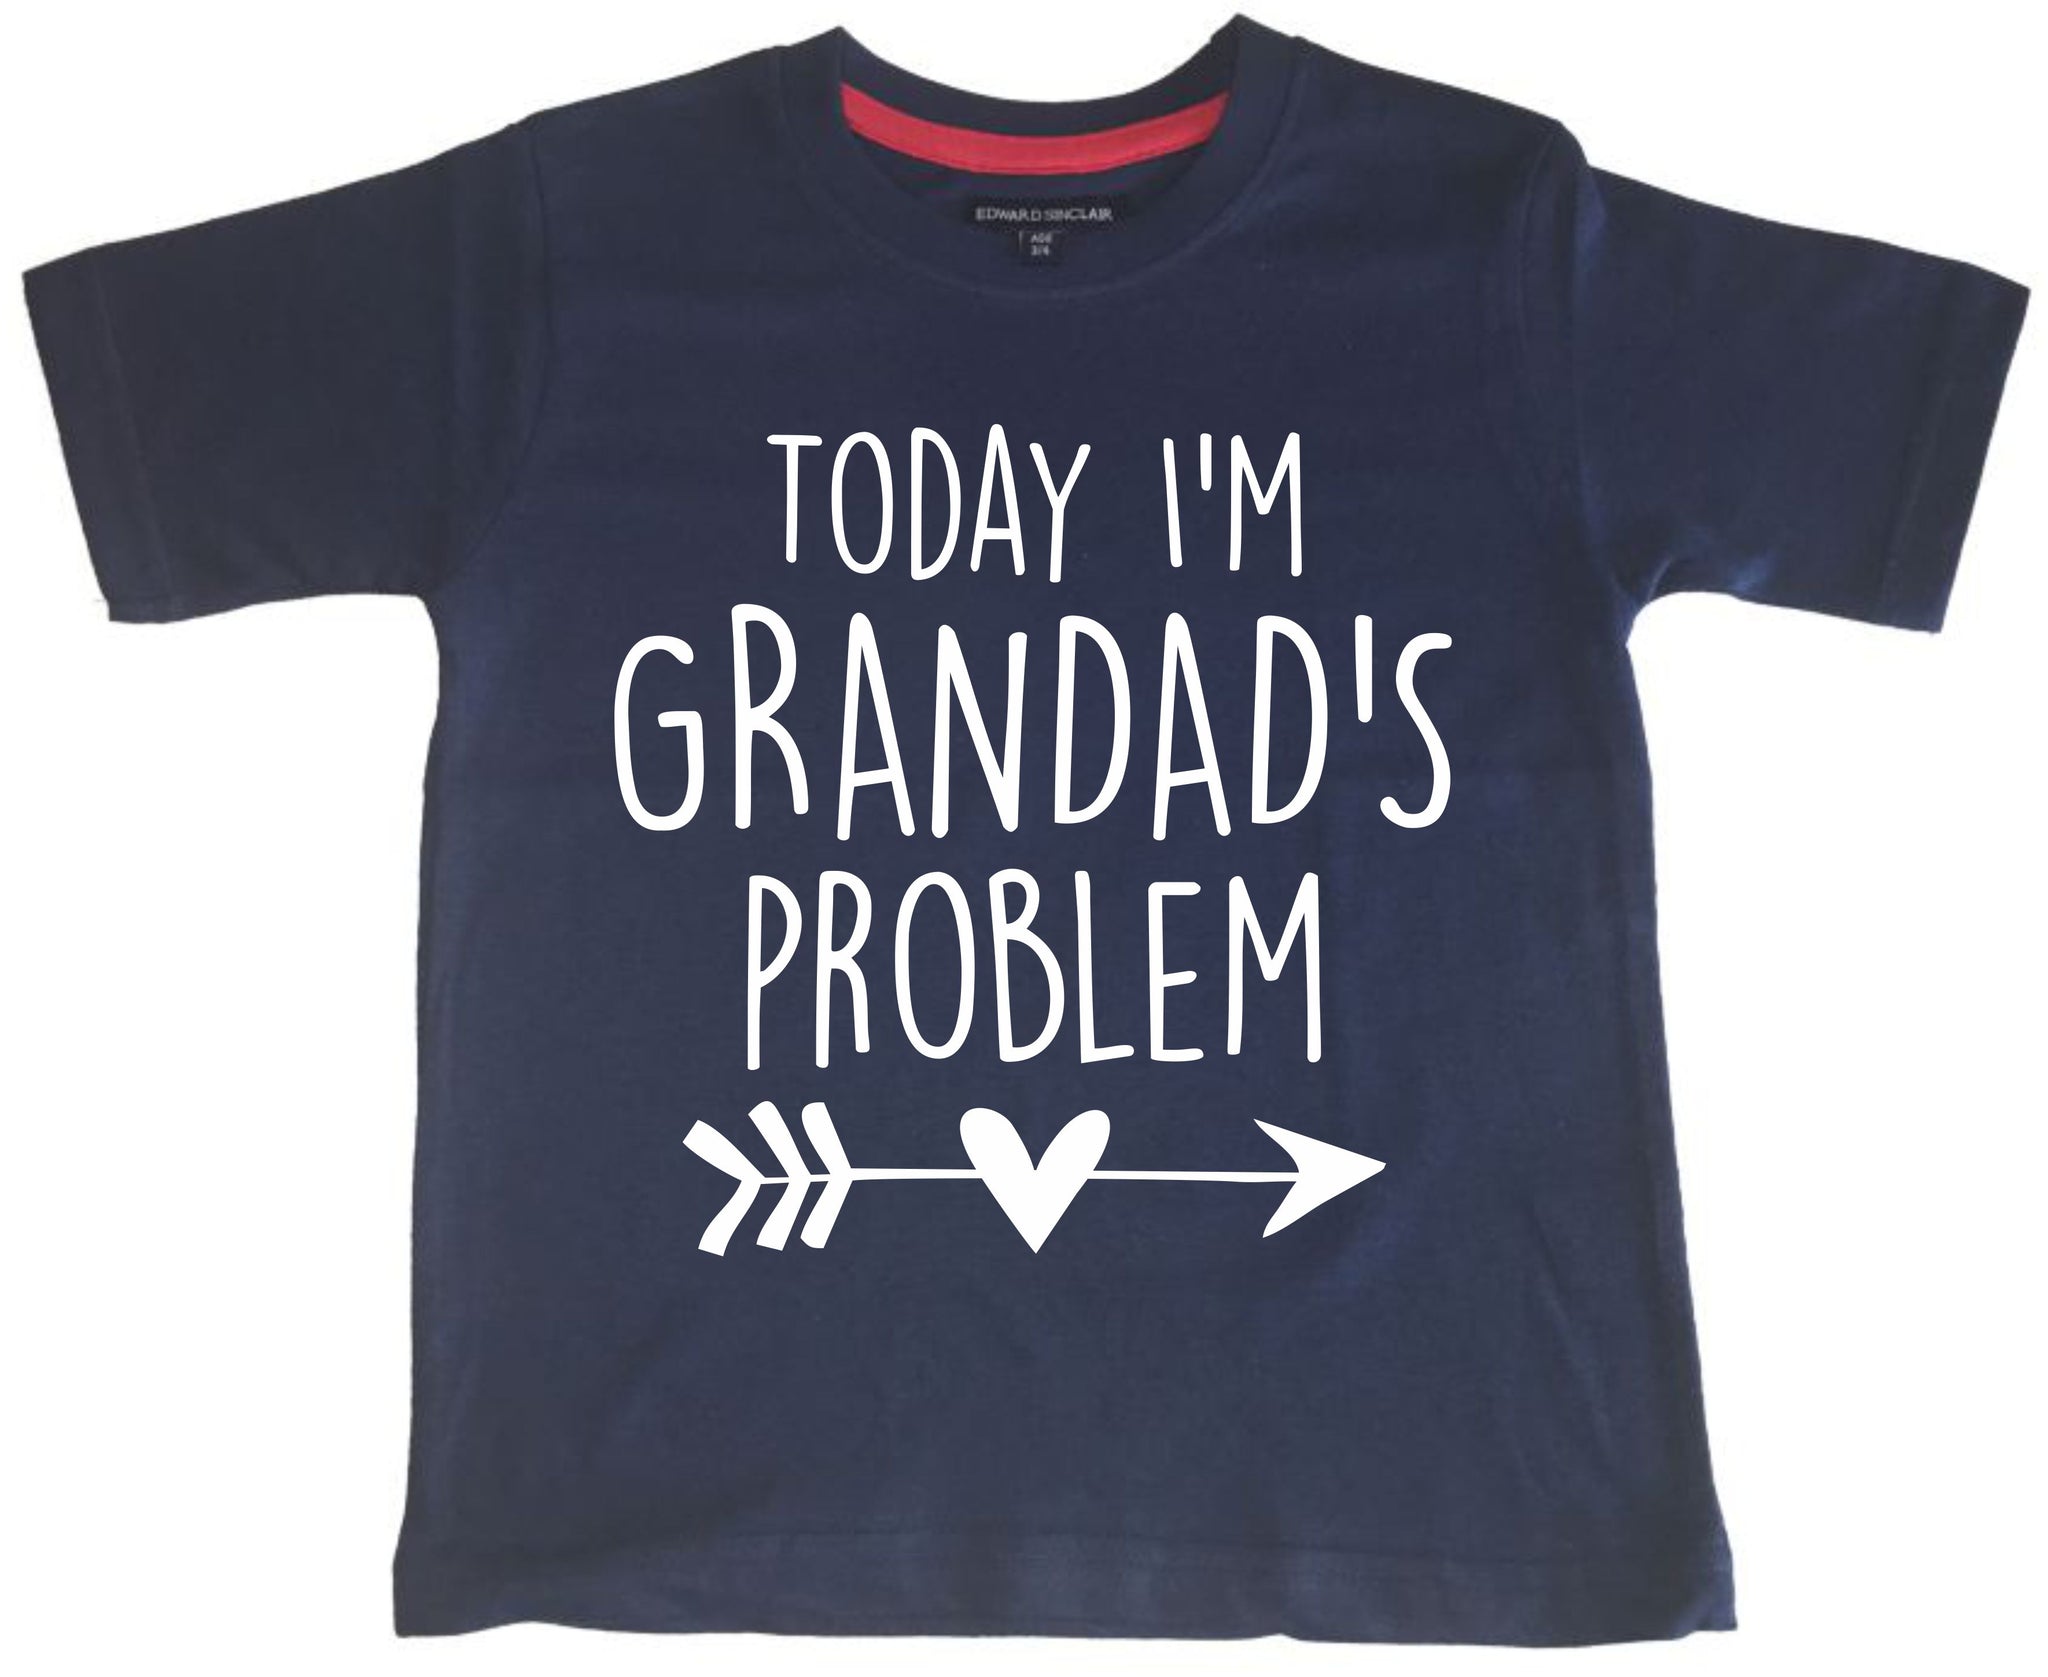 Today i'm Grandad's problem. Children's T-shirt